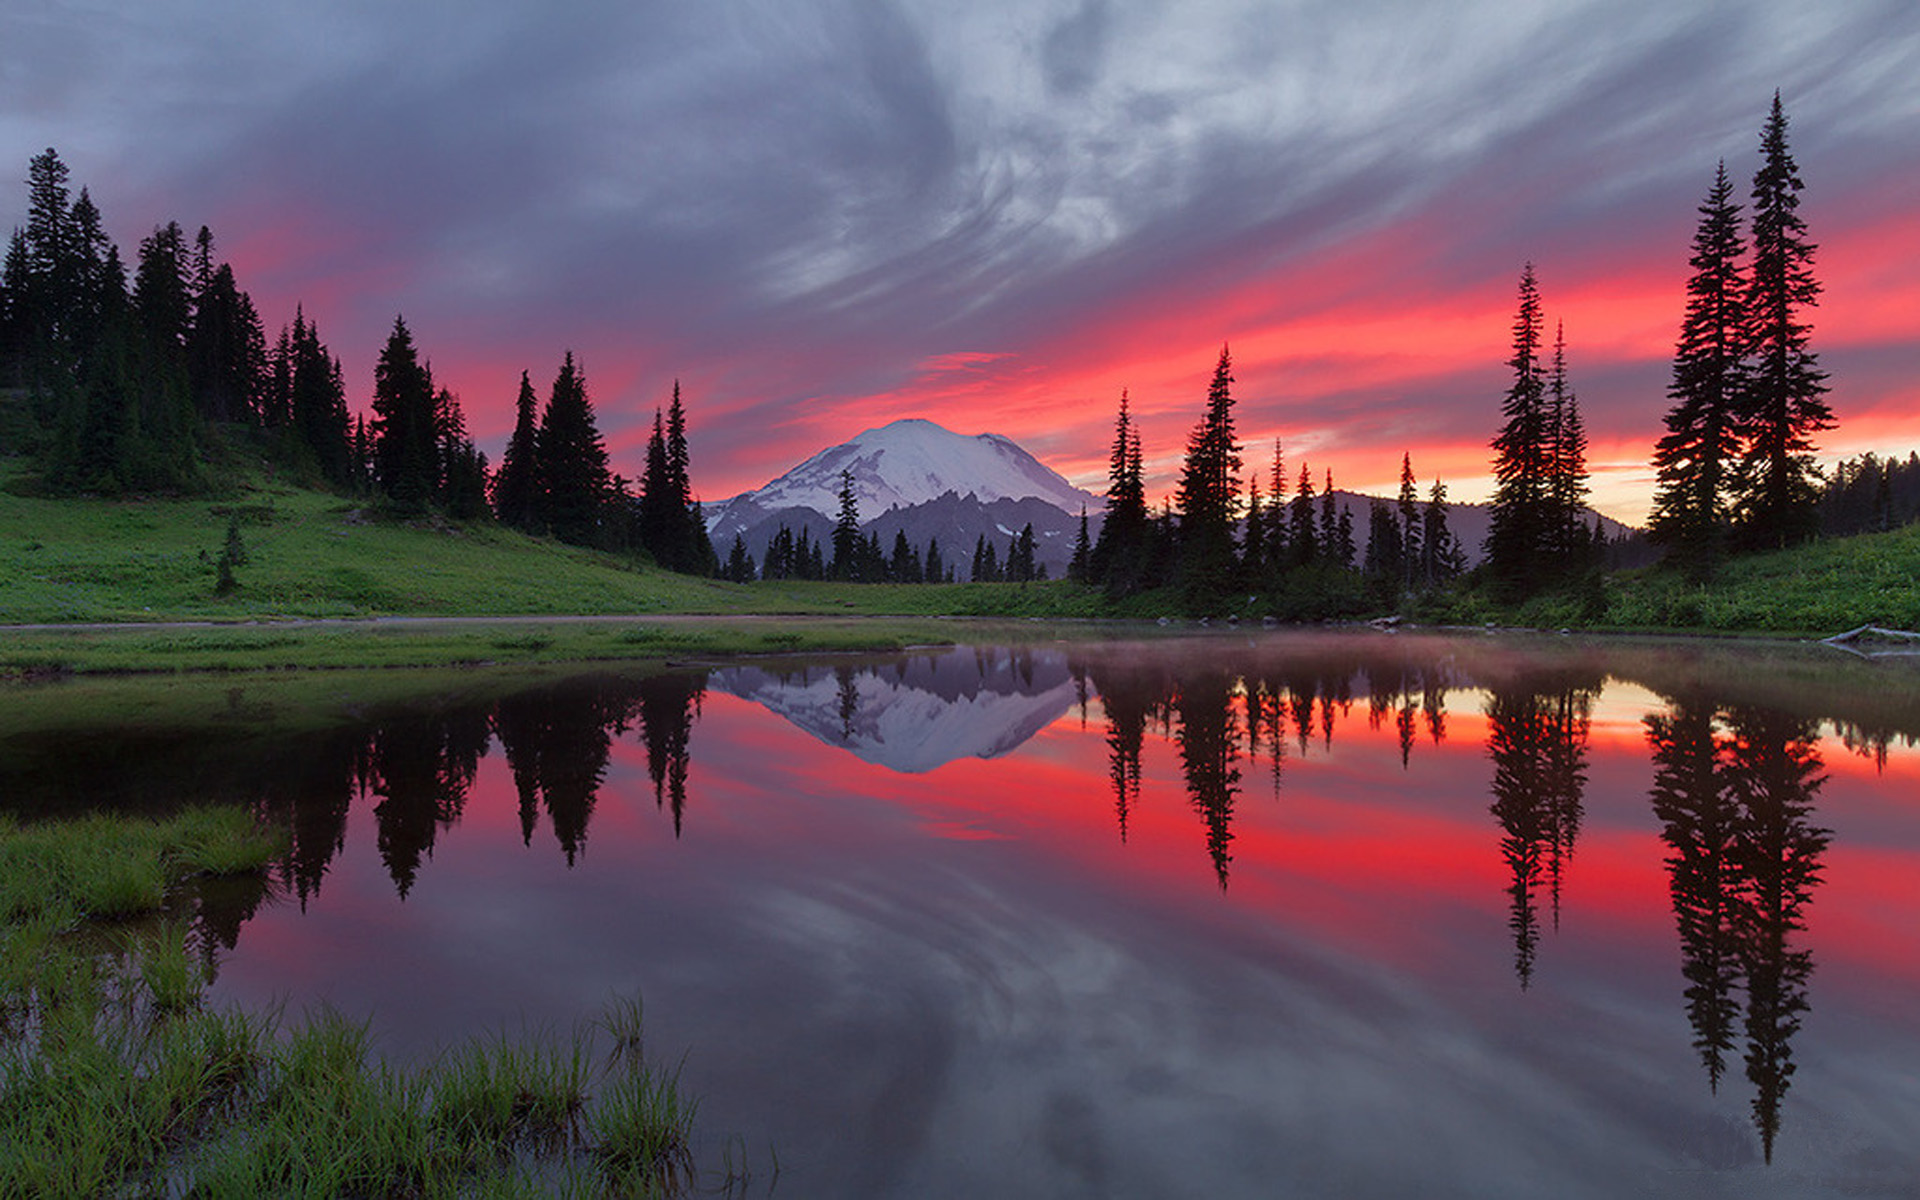 Sunset over Mount Rainier